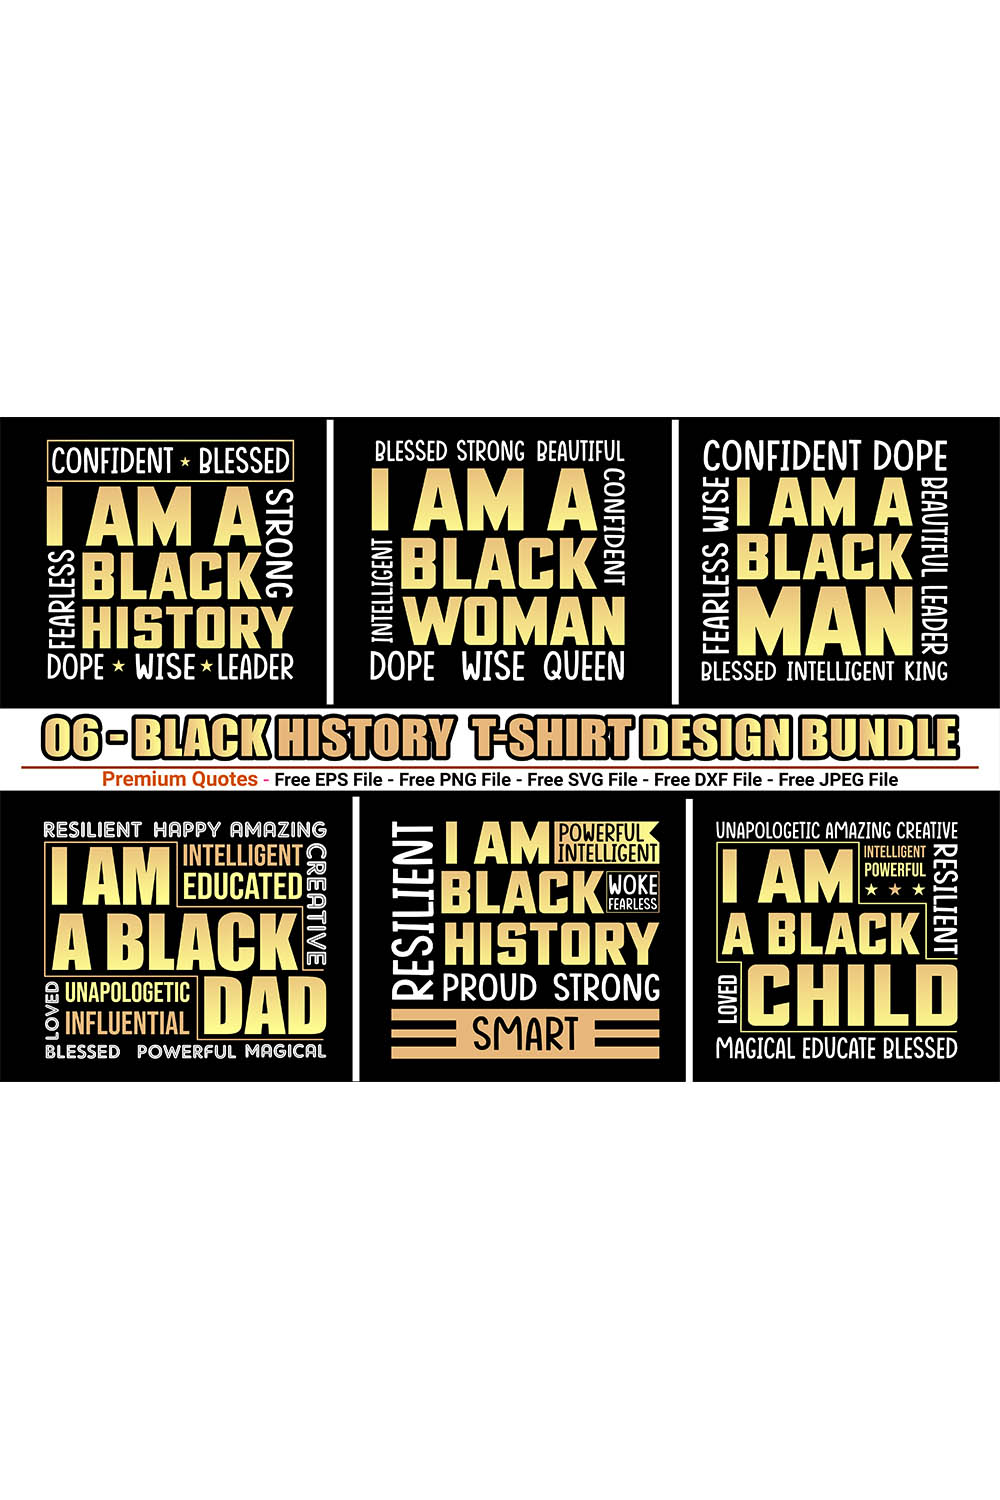 Black history t-shirt design bundle pinterest preview image.